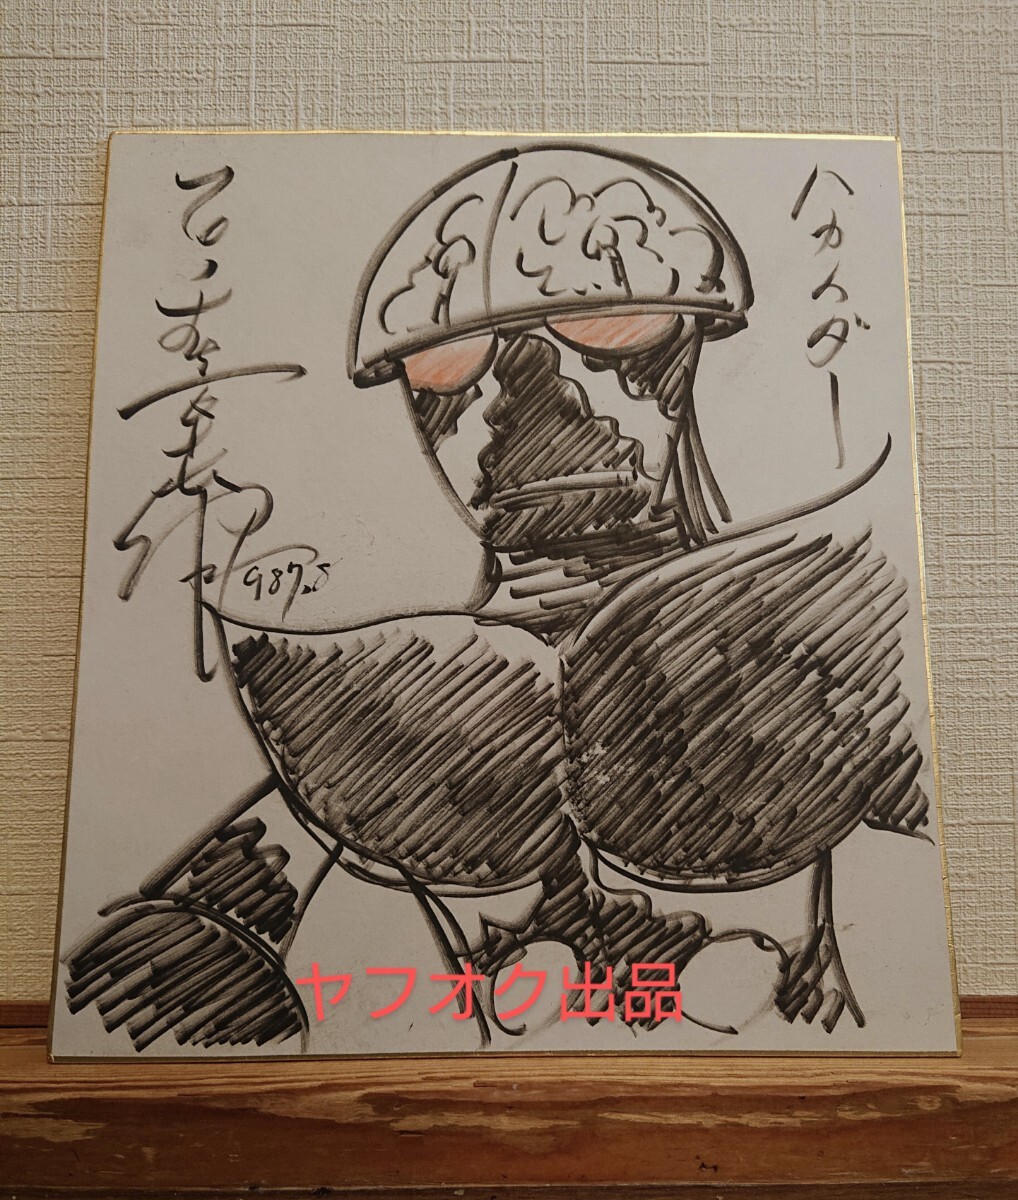 Shotaro Ishinomori Hakaider Illustration Signed Shikishi Kamen Rider Kikaider Shotaro Ishimori, comics, anime goods, sign, Hand-drawn painting